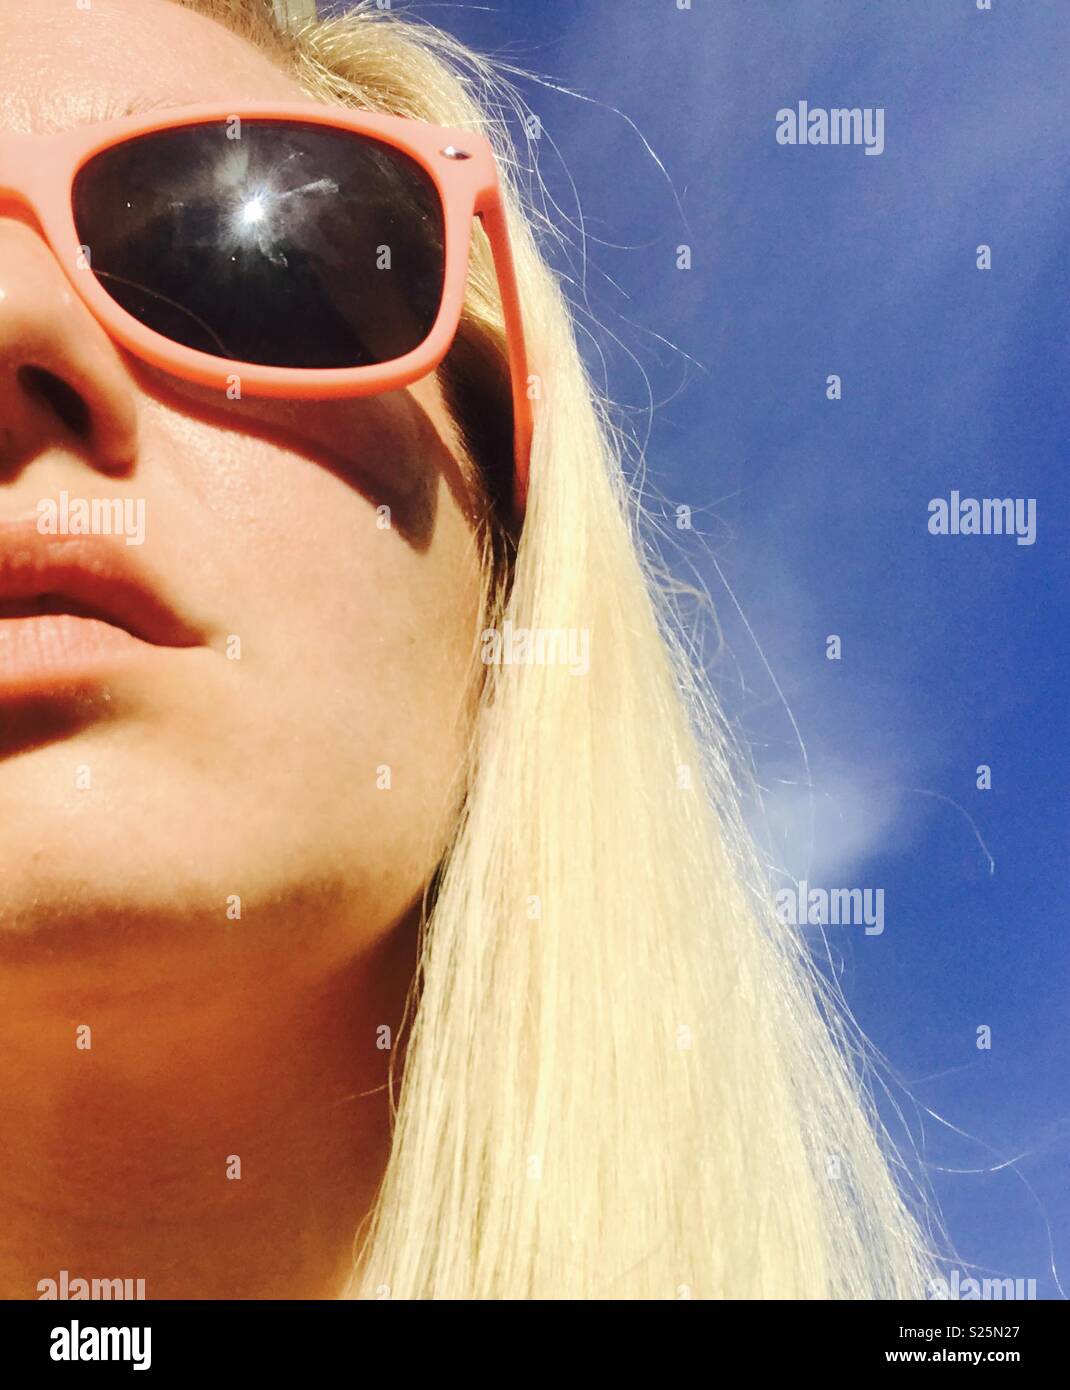 Platinum blonde hair woman wearing sunglasses against a summer blue sky. Stock Photo